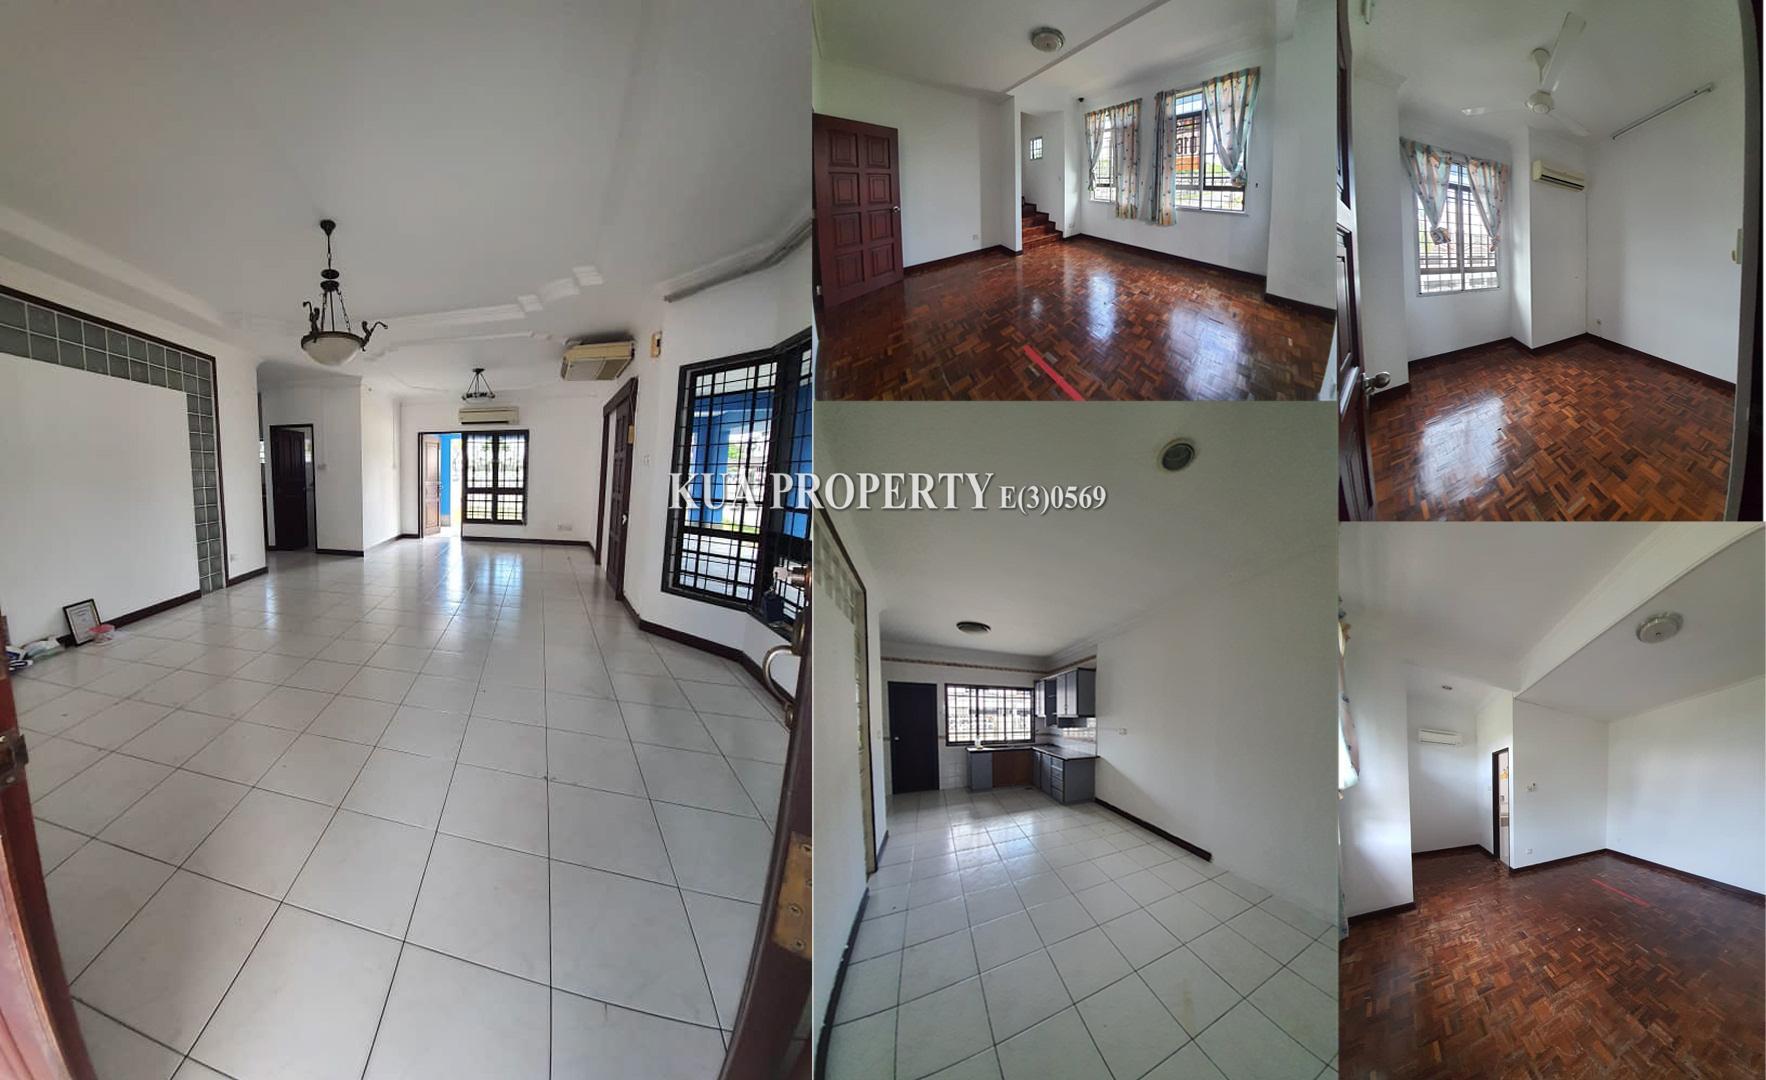 2.5 storey Semi Detached House For Sale ! at Bayor bukit ,Tabuan Jaya